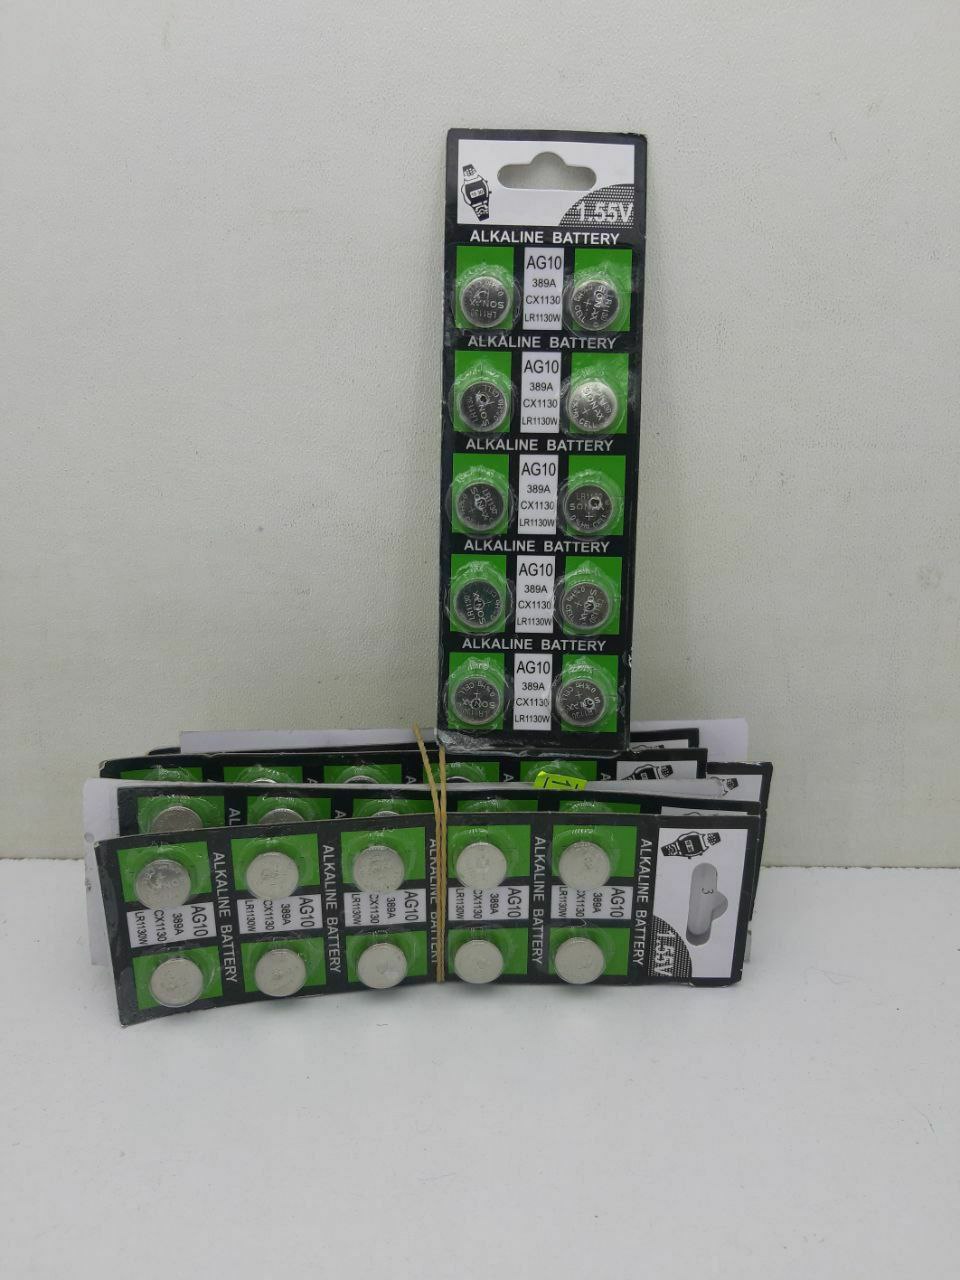   خرید باتری لوازم خانگی و ساعت  - شماره AG4 AG10 AG13 AG1 AG3